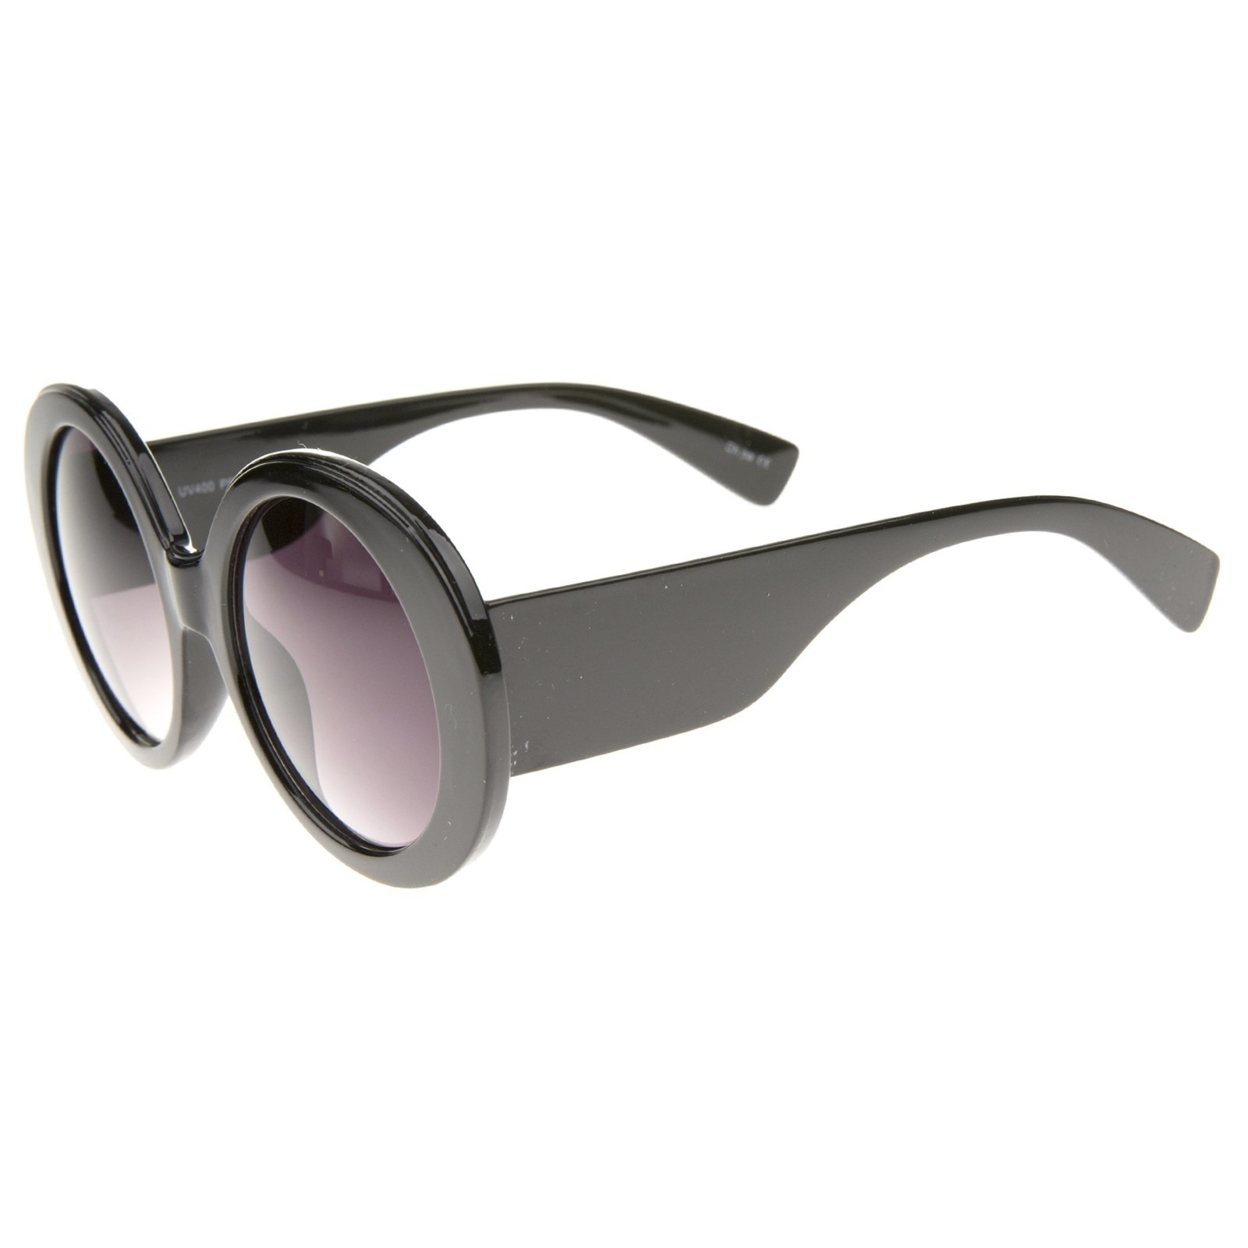 High Fashion Glam Chunky Round Oversize Sunglasses 50mm - Black / Smoke